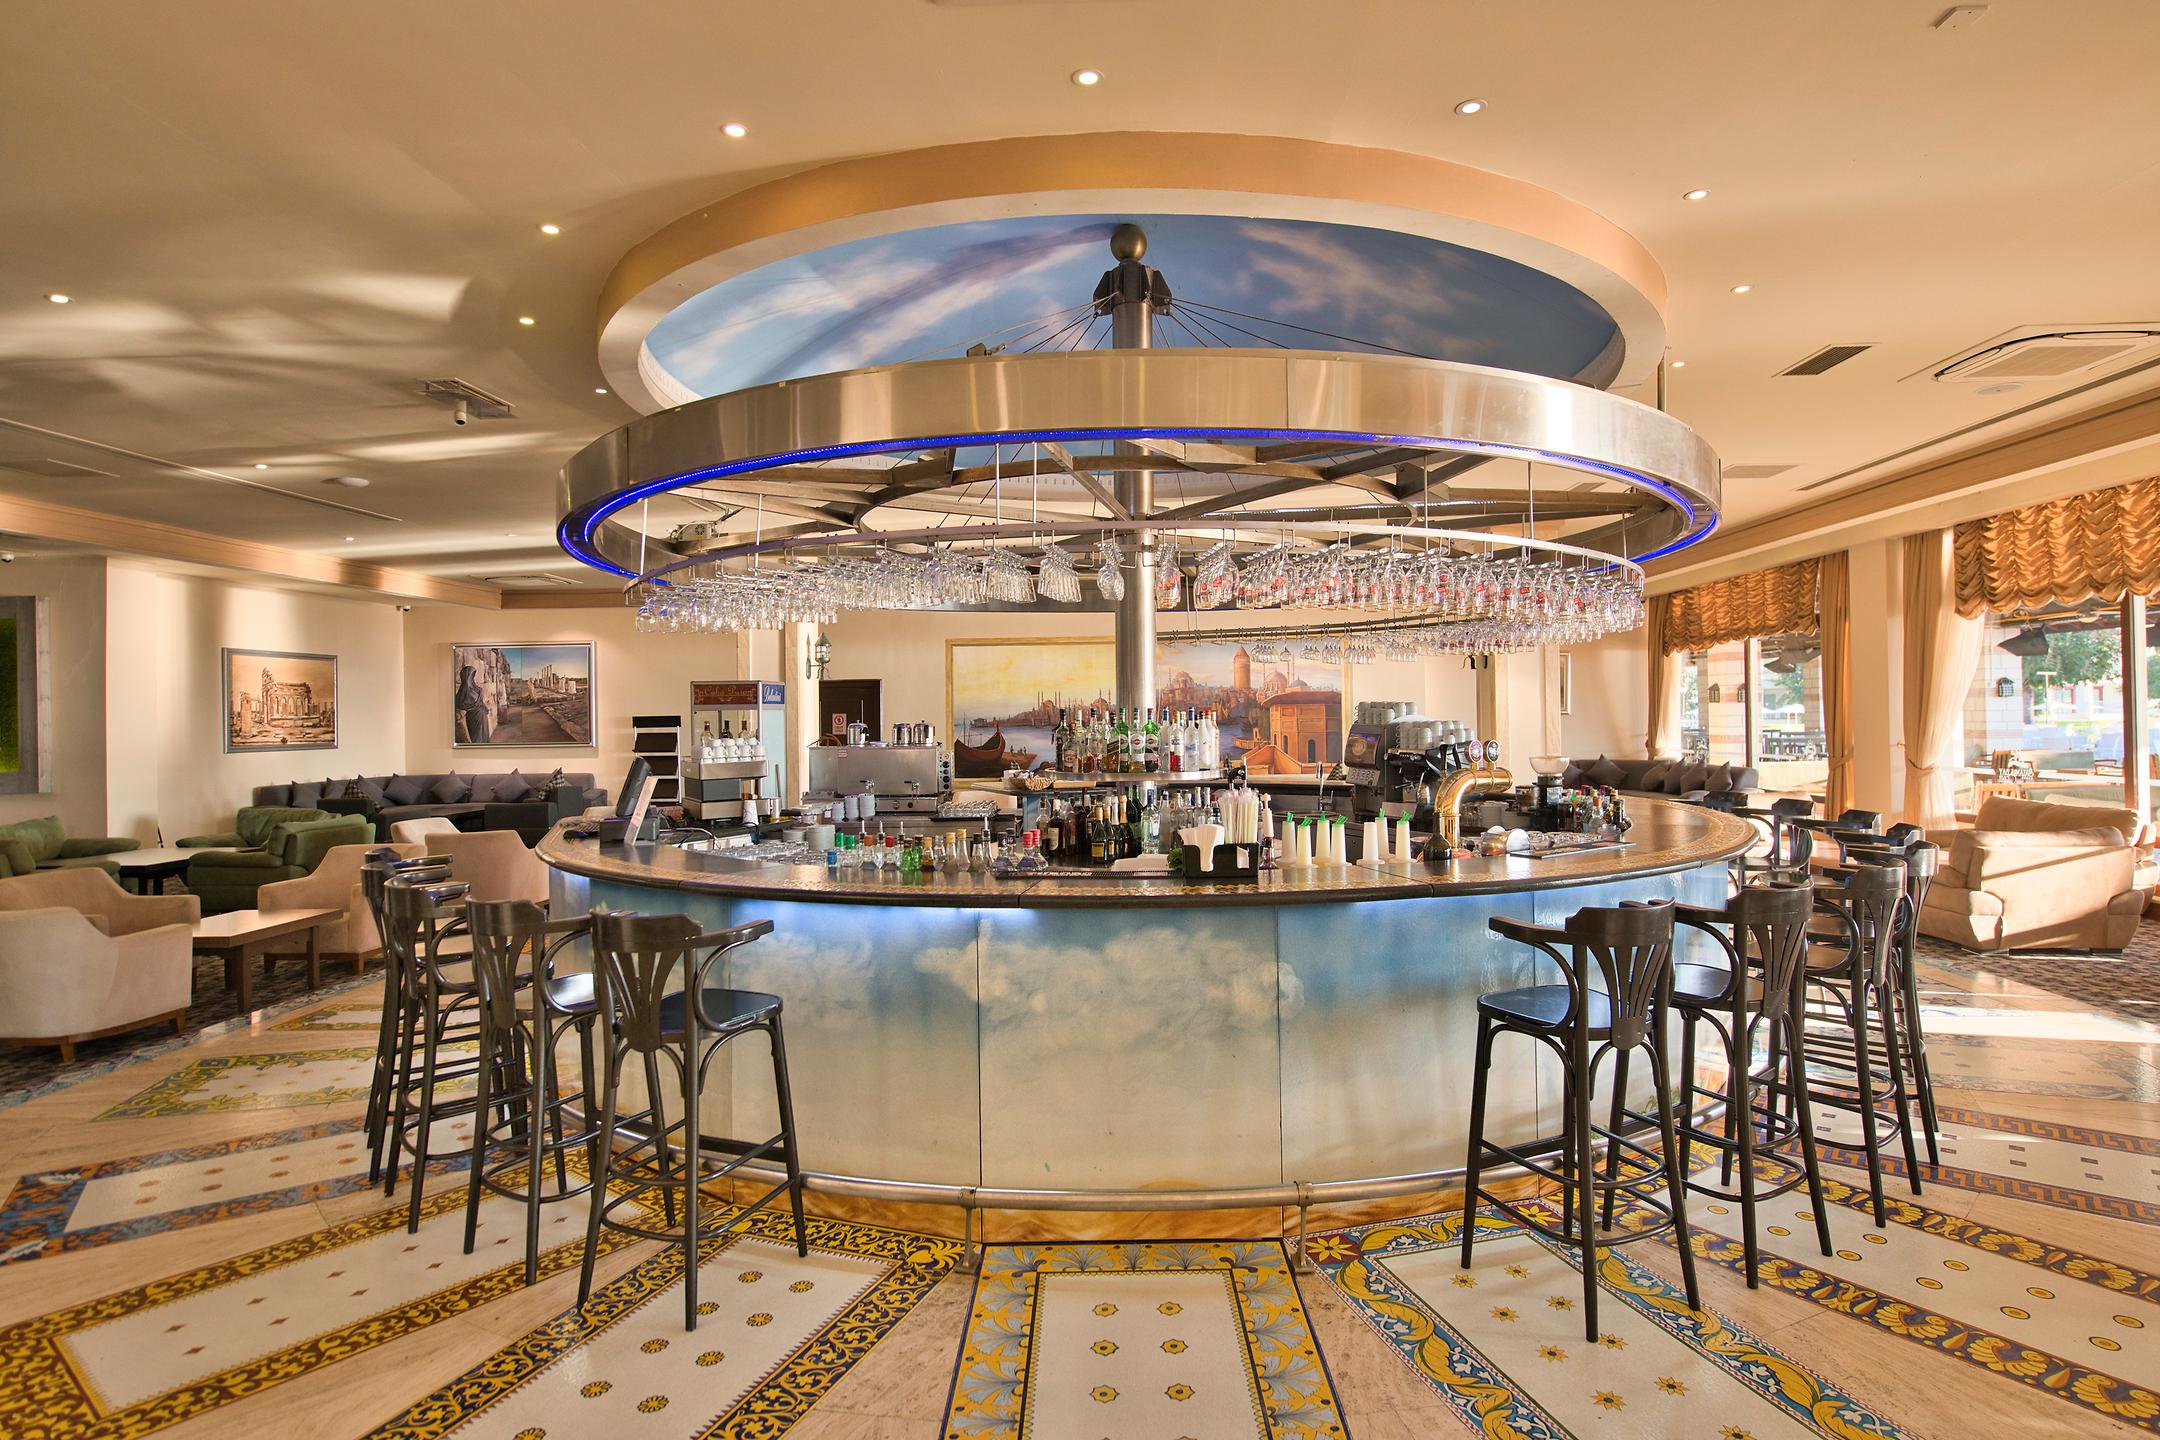 Salamis Bay Conti Hotel Casino Yılbaşı Programı